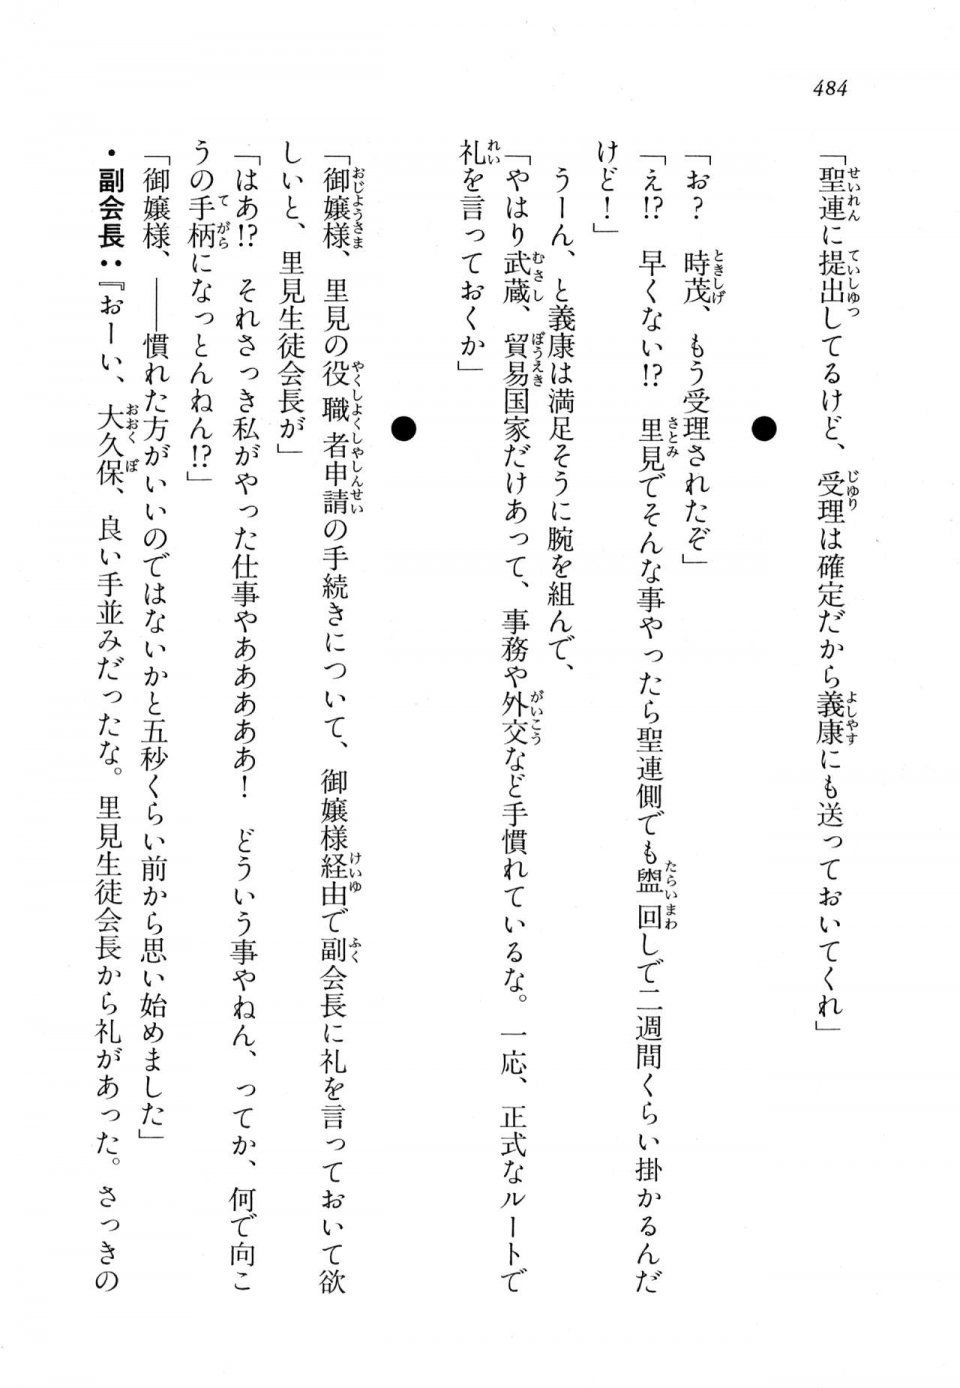 Kyoukai Senjou no Horizon LN Vol 18(7C) Part 1 - Photo #484